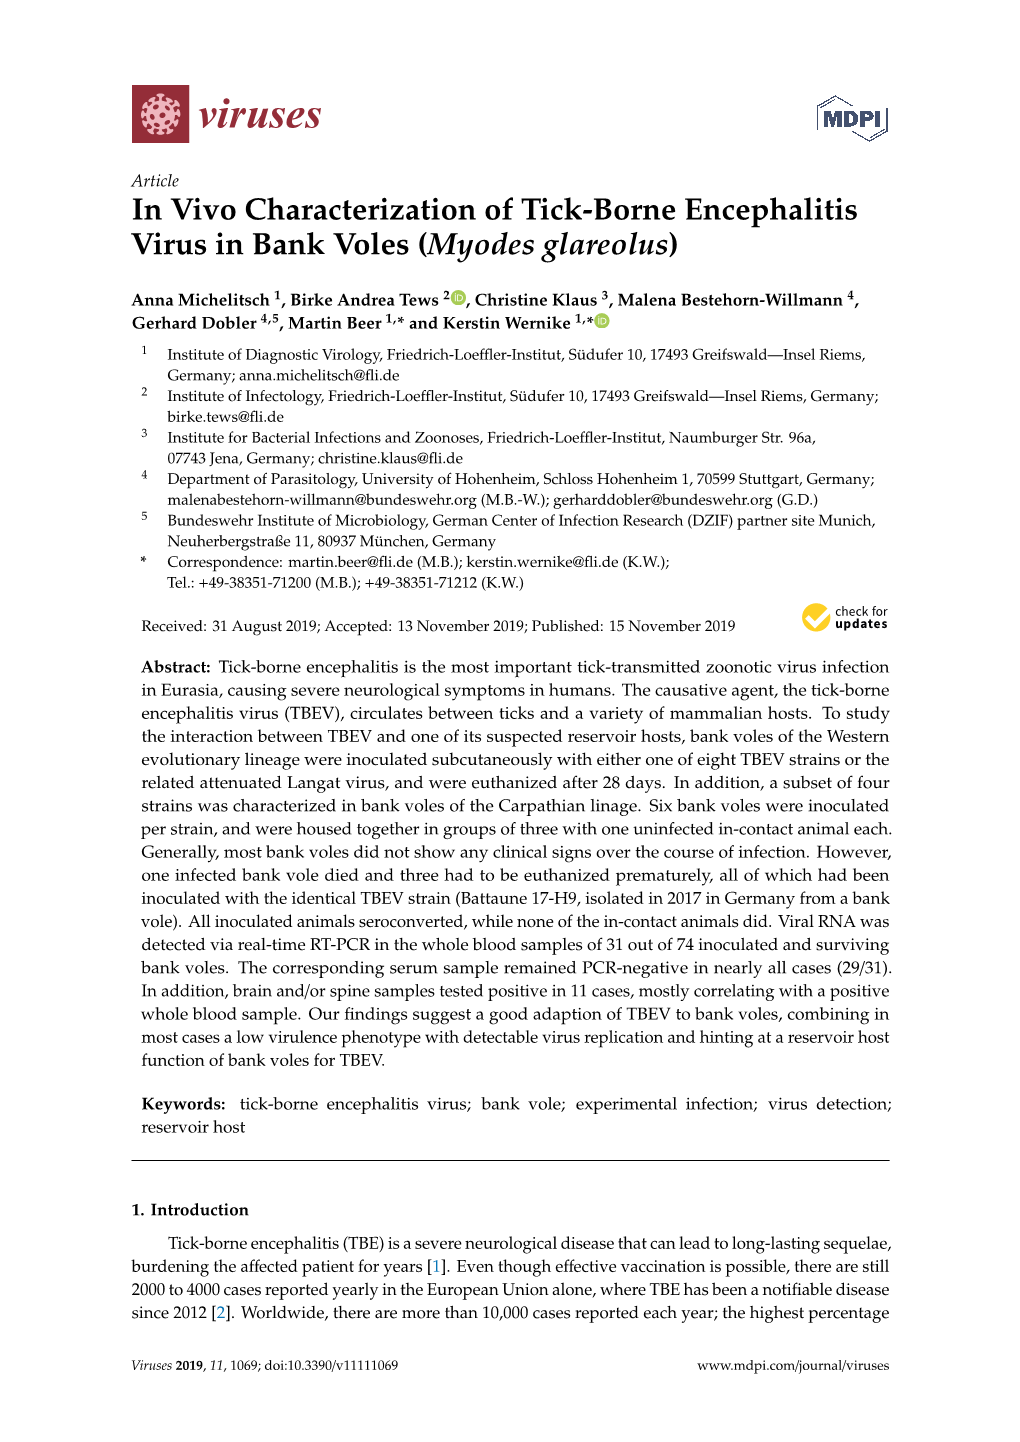 In Vivo Characterization of Tick-Borne Encephalitis Virus in Bank Voles (Myodes Glareolus)